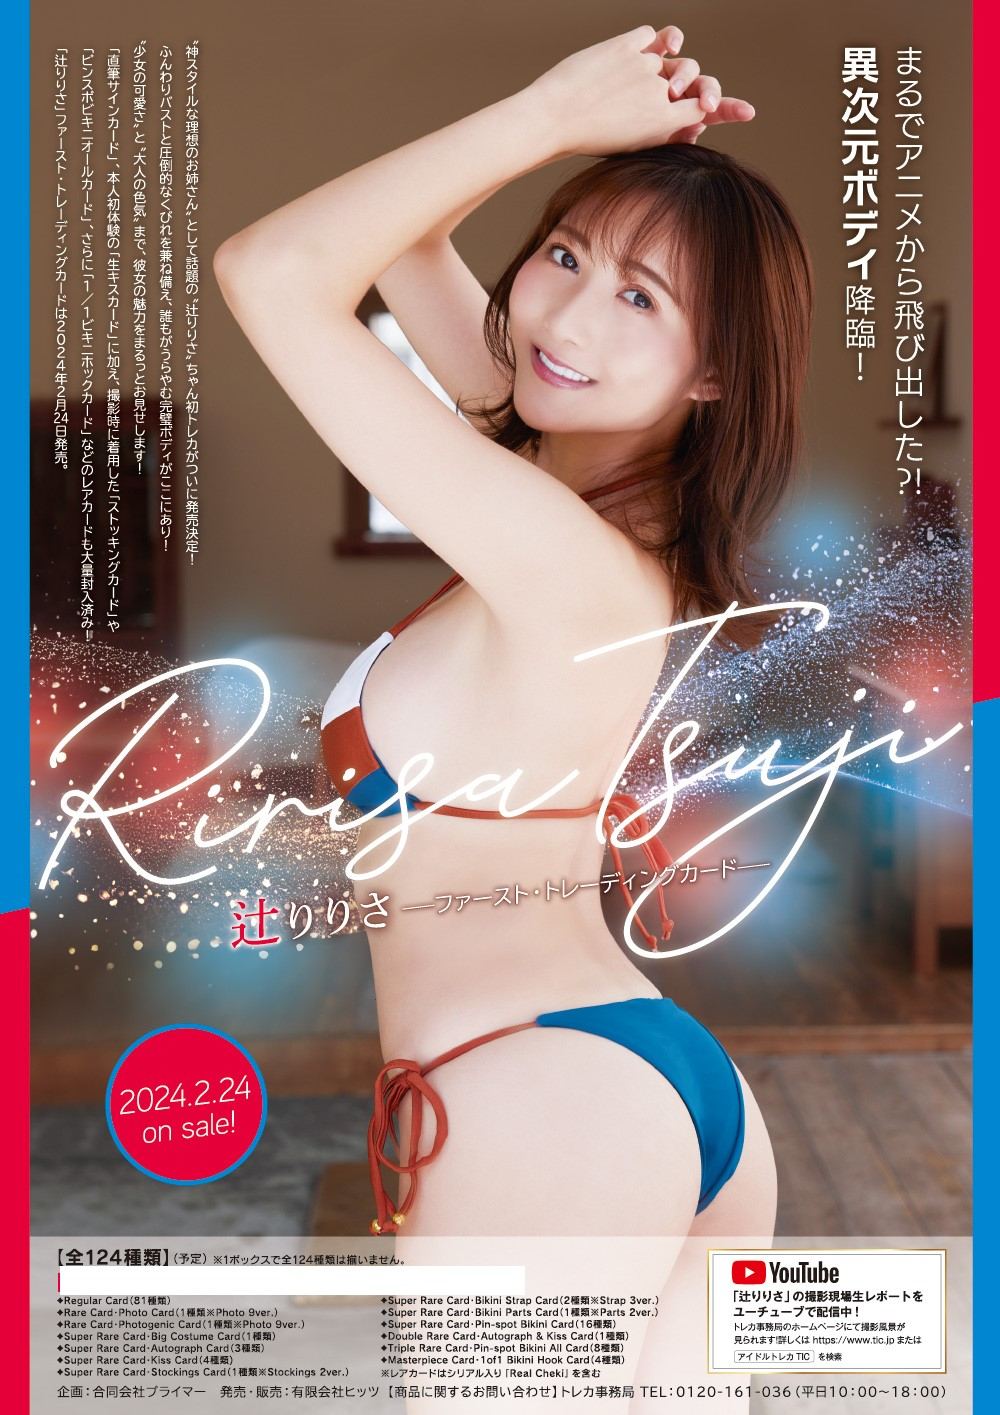 Ririsa Tsuji First Trading Card Hits